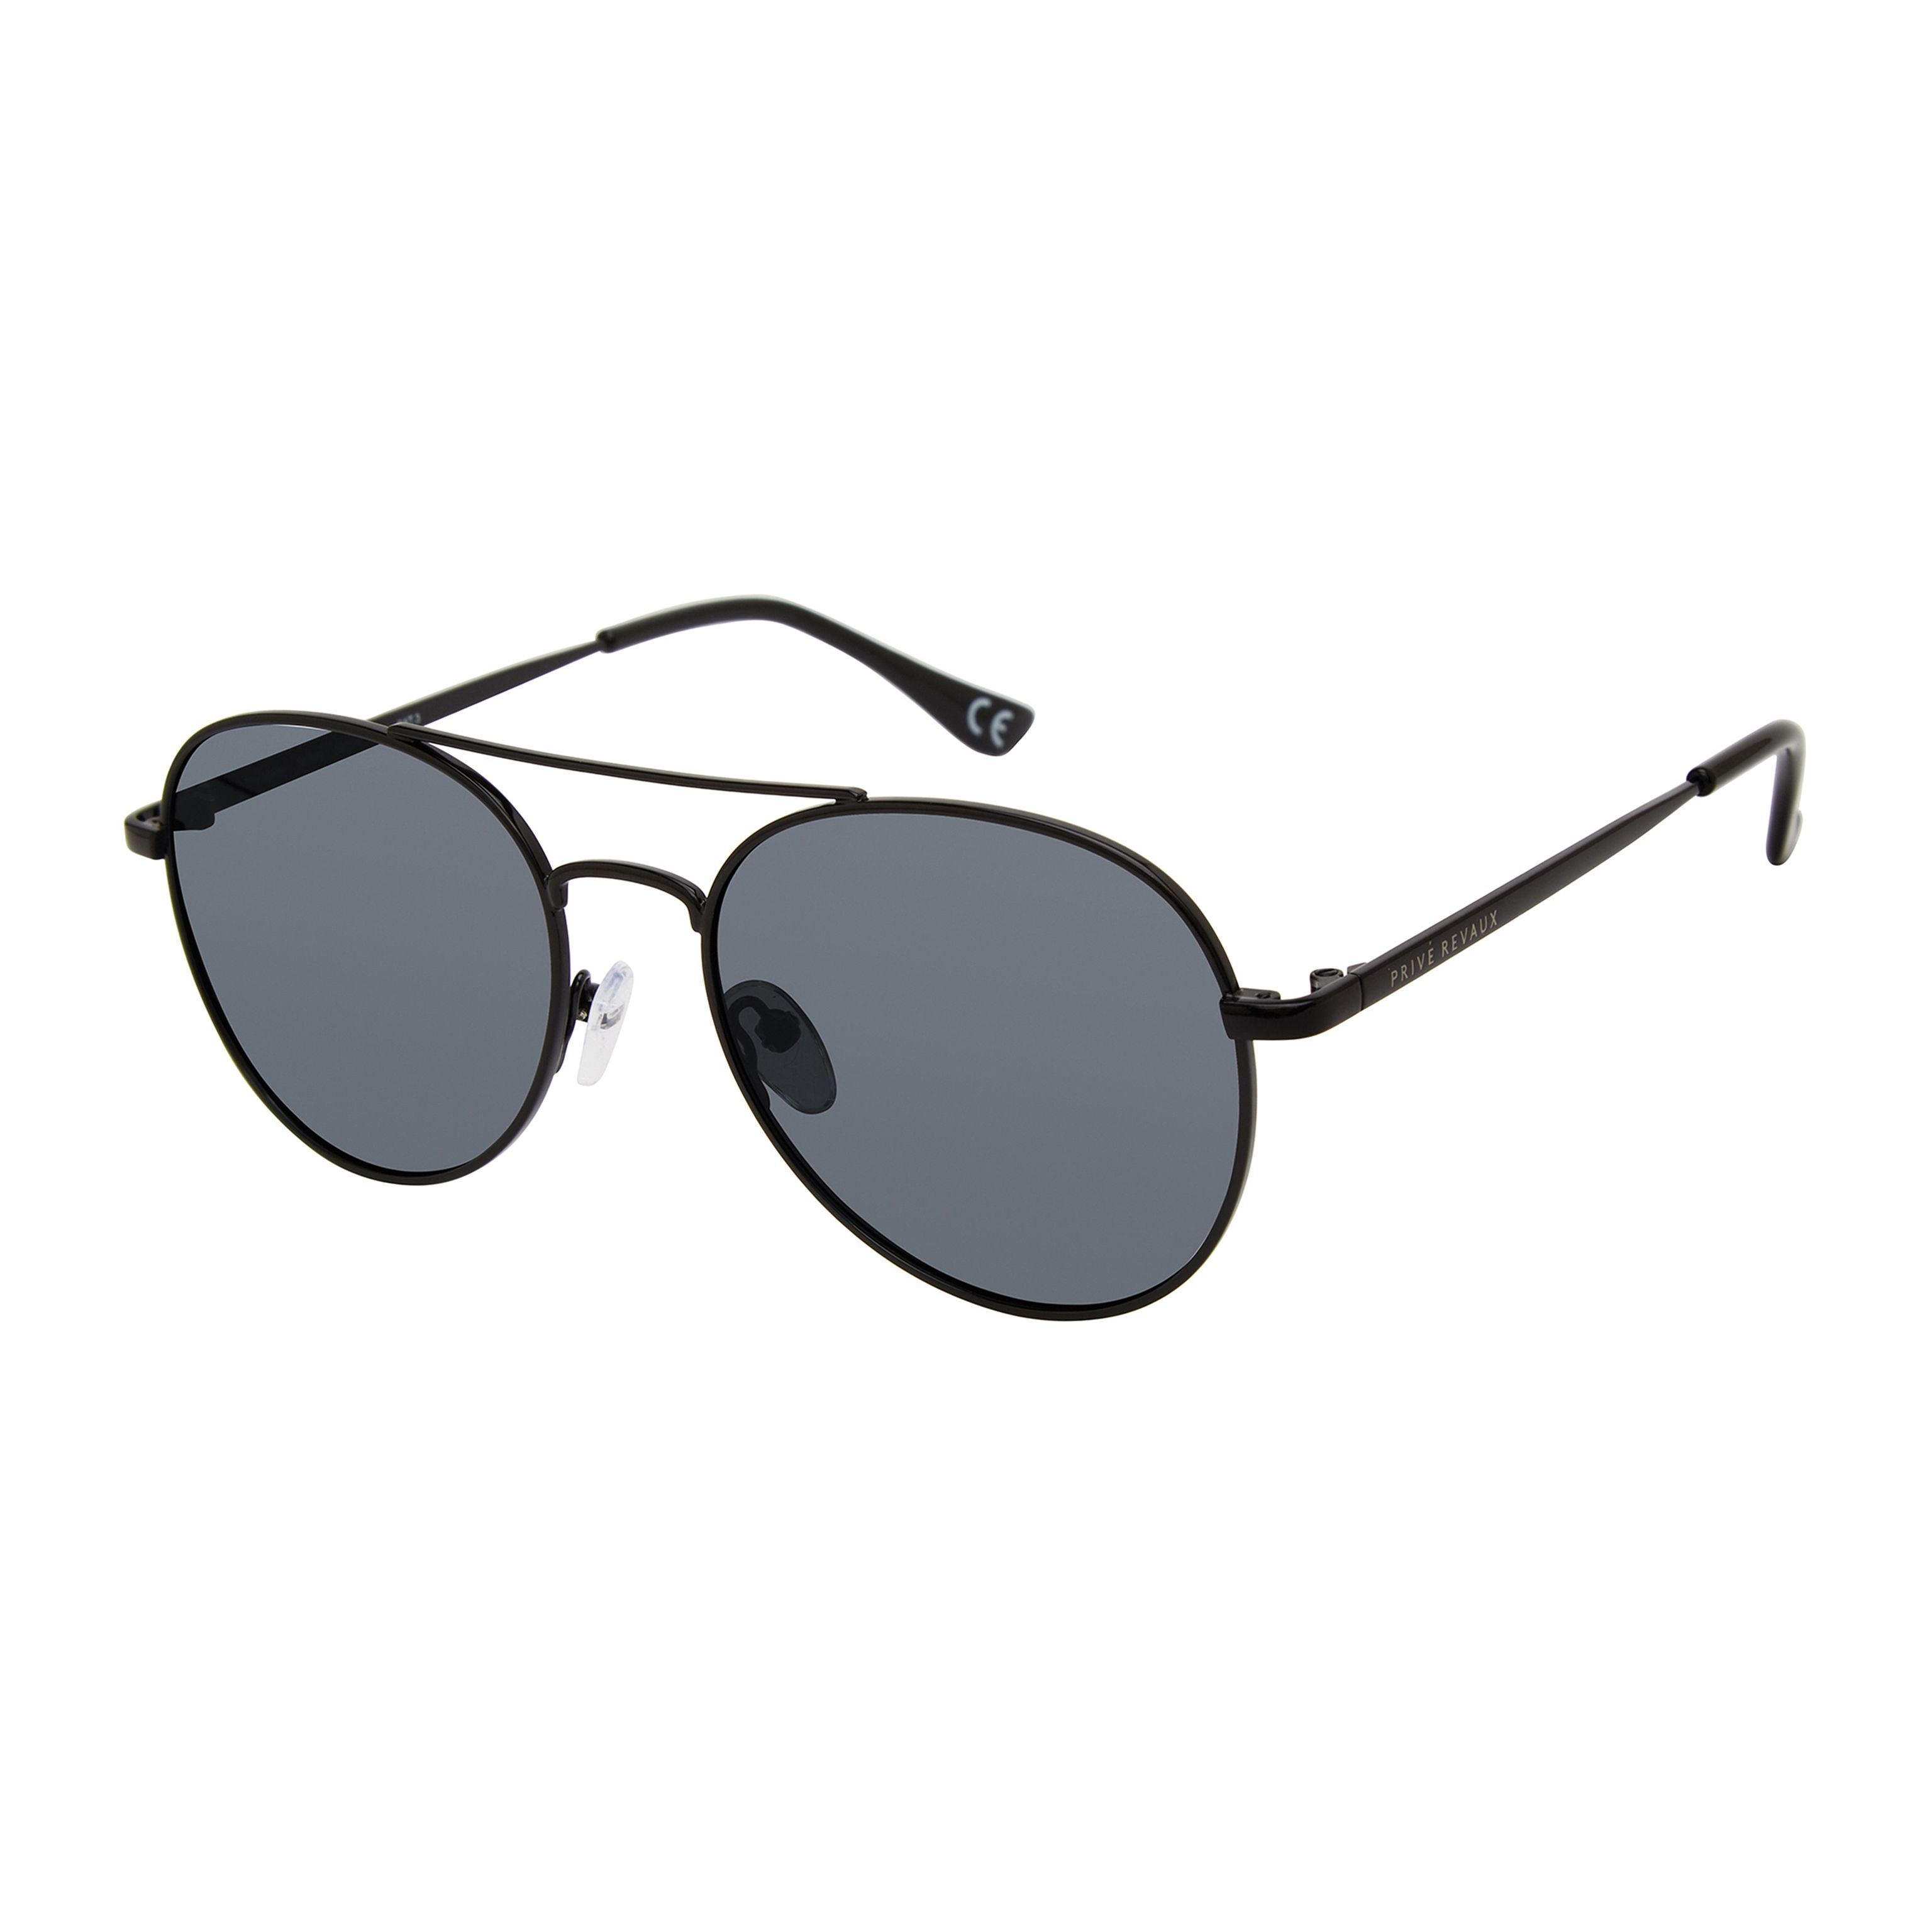 THE MARLIN S Pilot Sunglasses 807 M9 - size 54